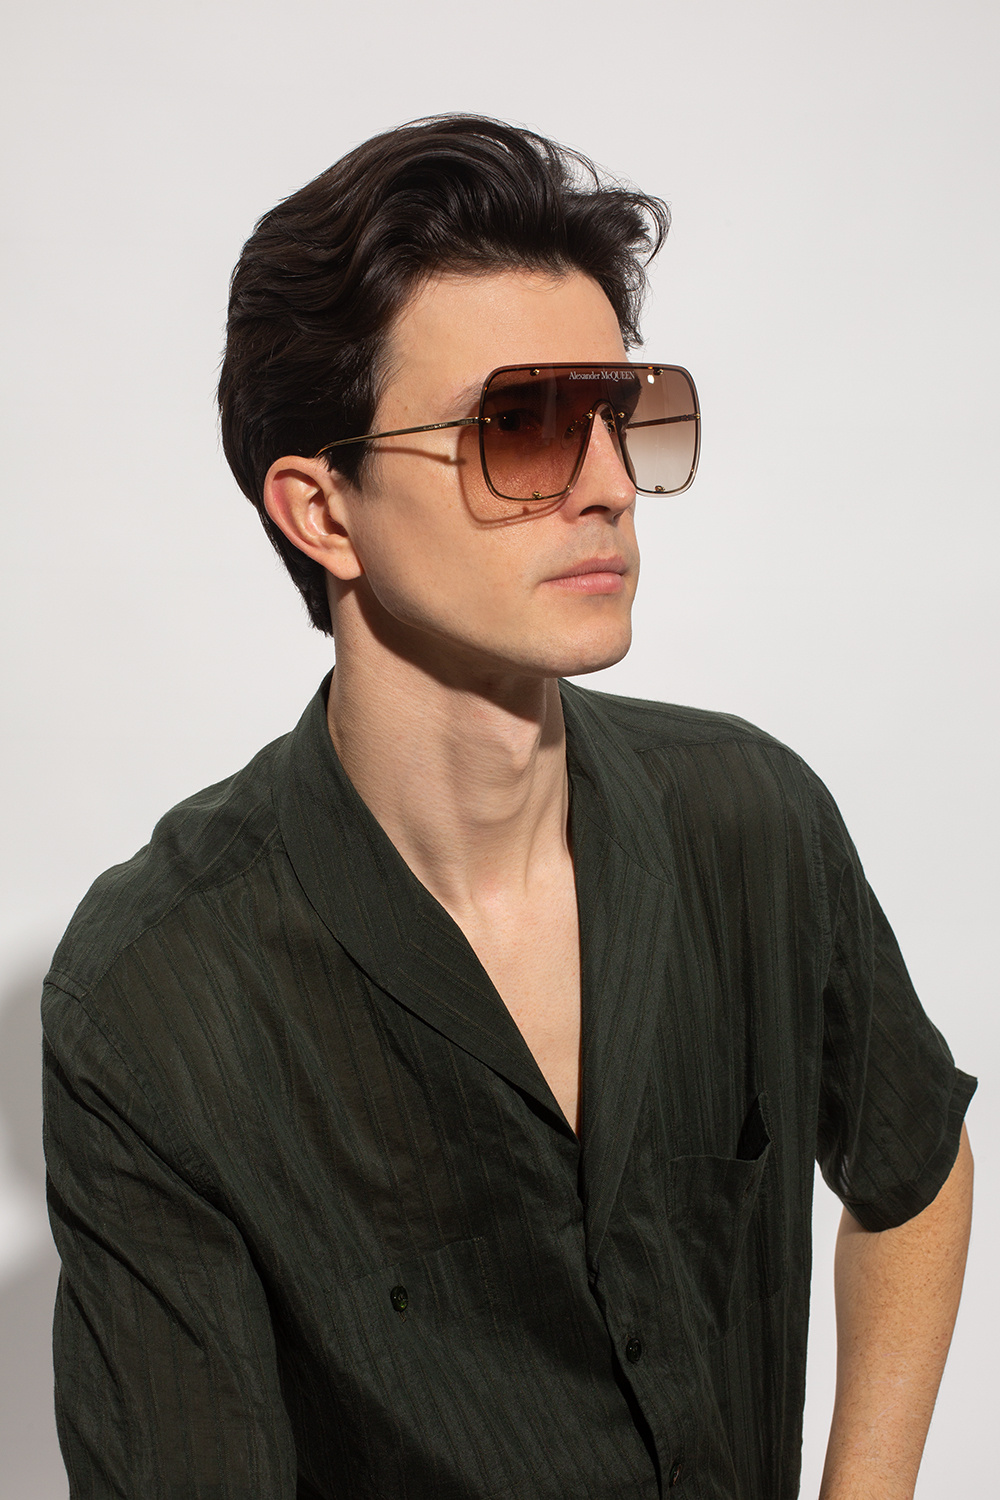 Alexander McQueen FC0 General purpose sunglasses